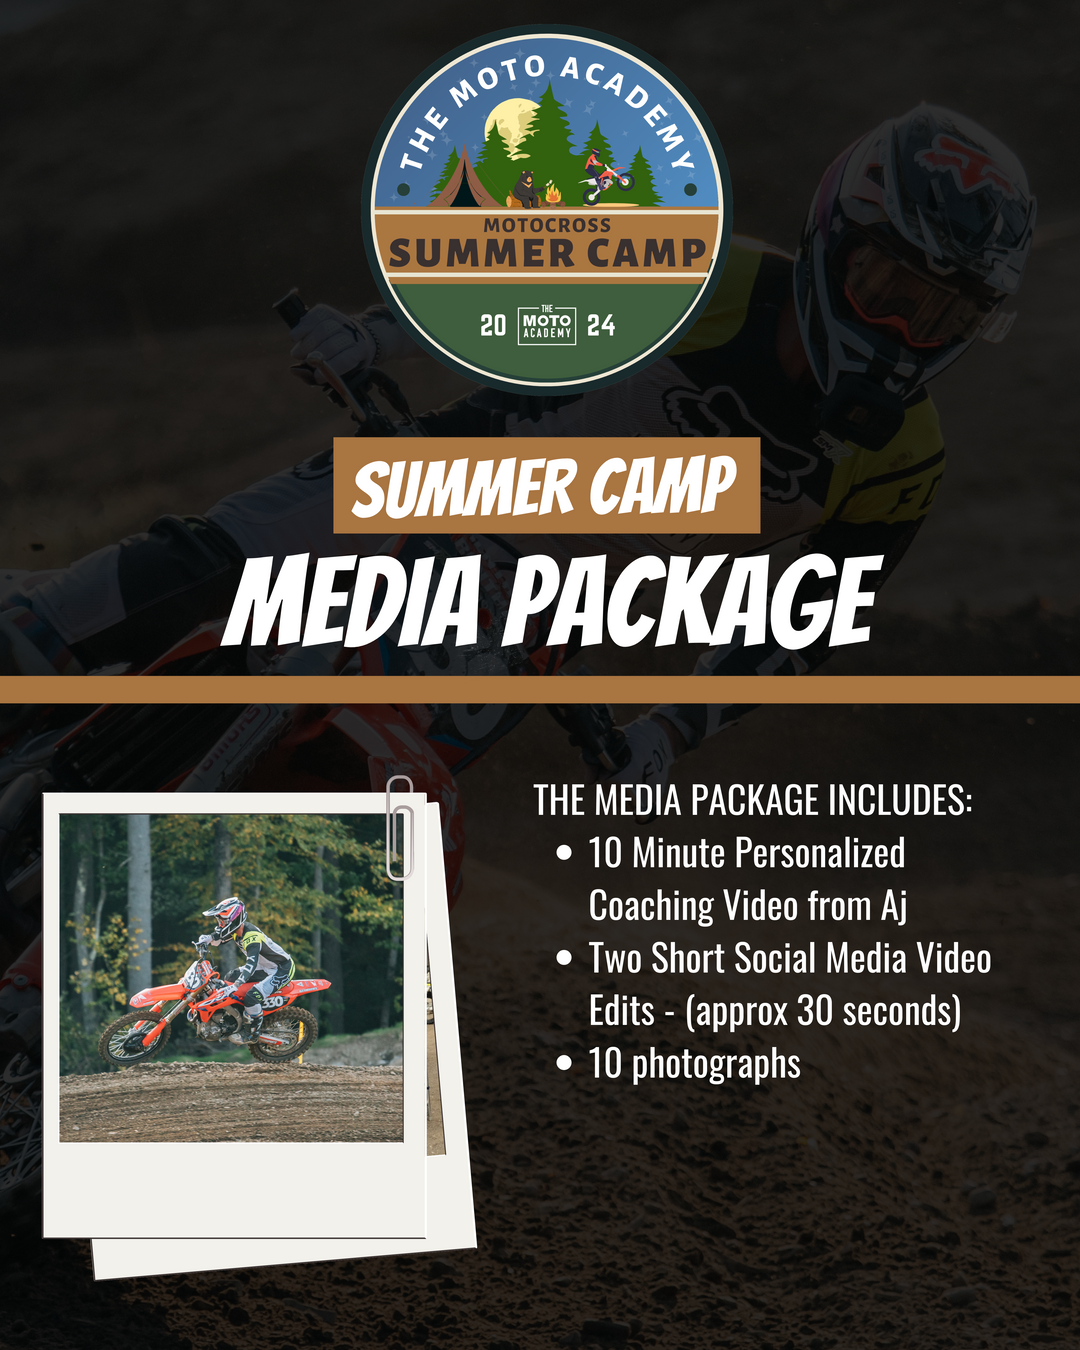 Aug. 5th-9th | Sunset Ridge Summer Camp | Walnut, IL